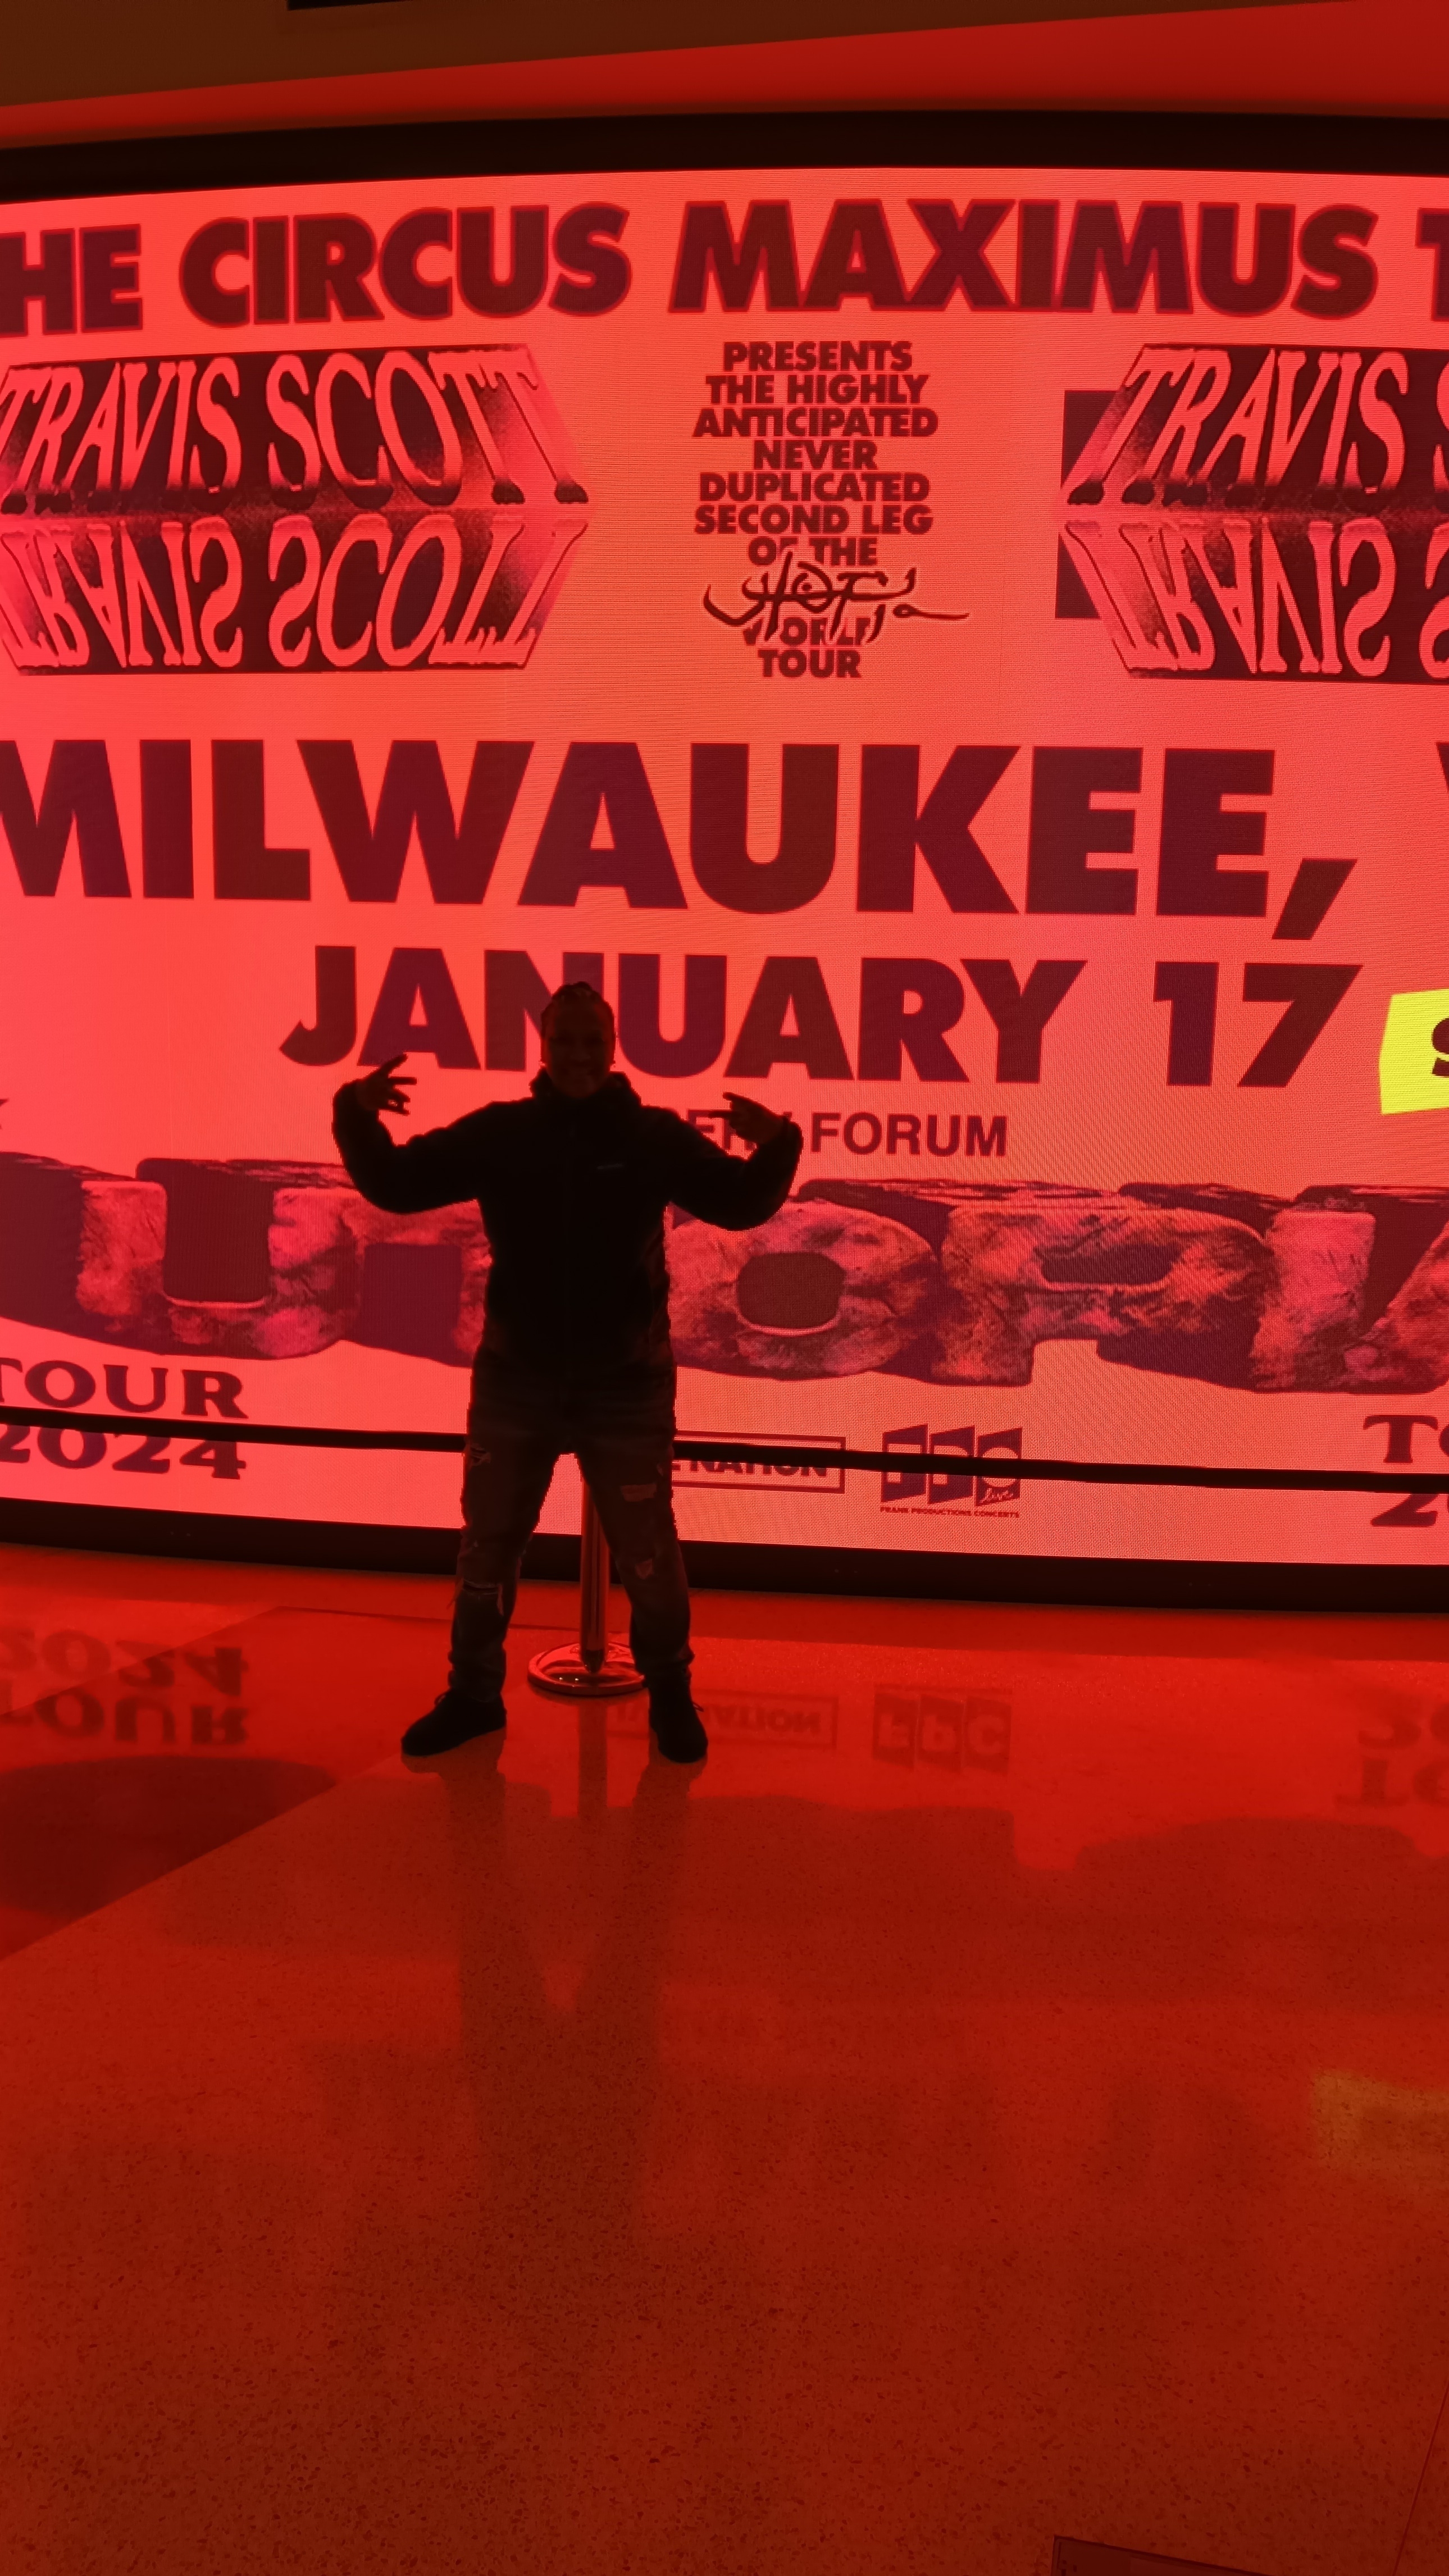 Travis Scott bringing 'Utopia - Circus Maximus Tour' to Milwaukee